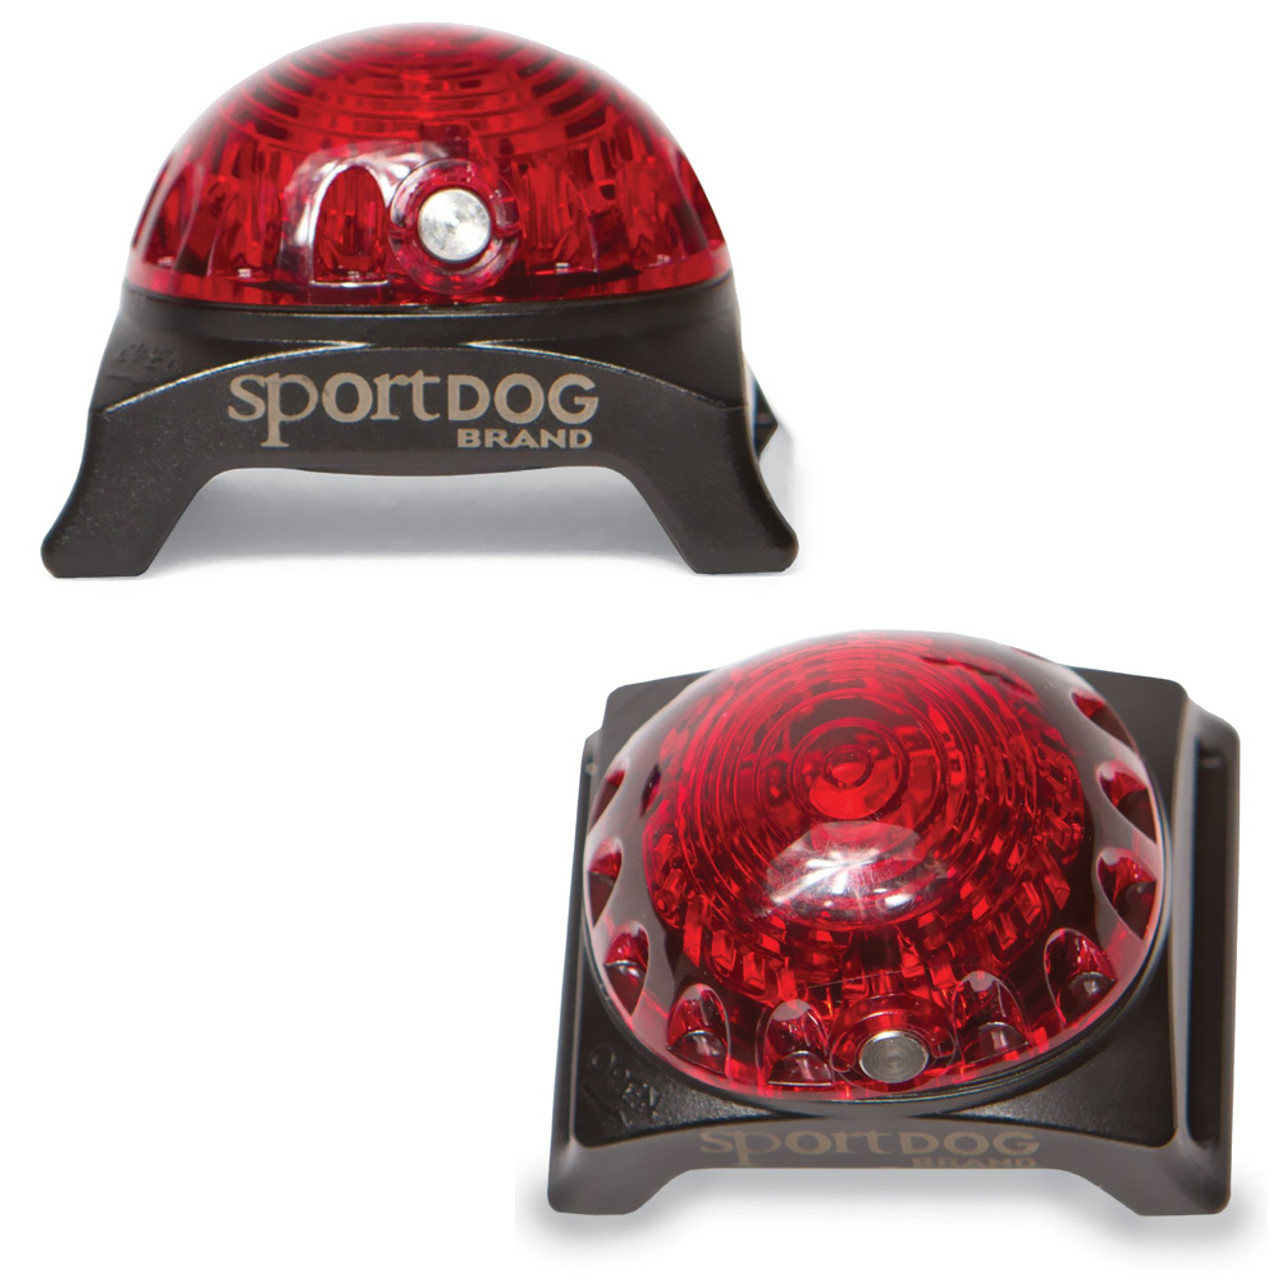 SportDog, Locator Beacon by SportDog Brand